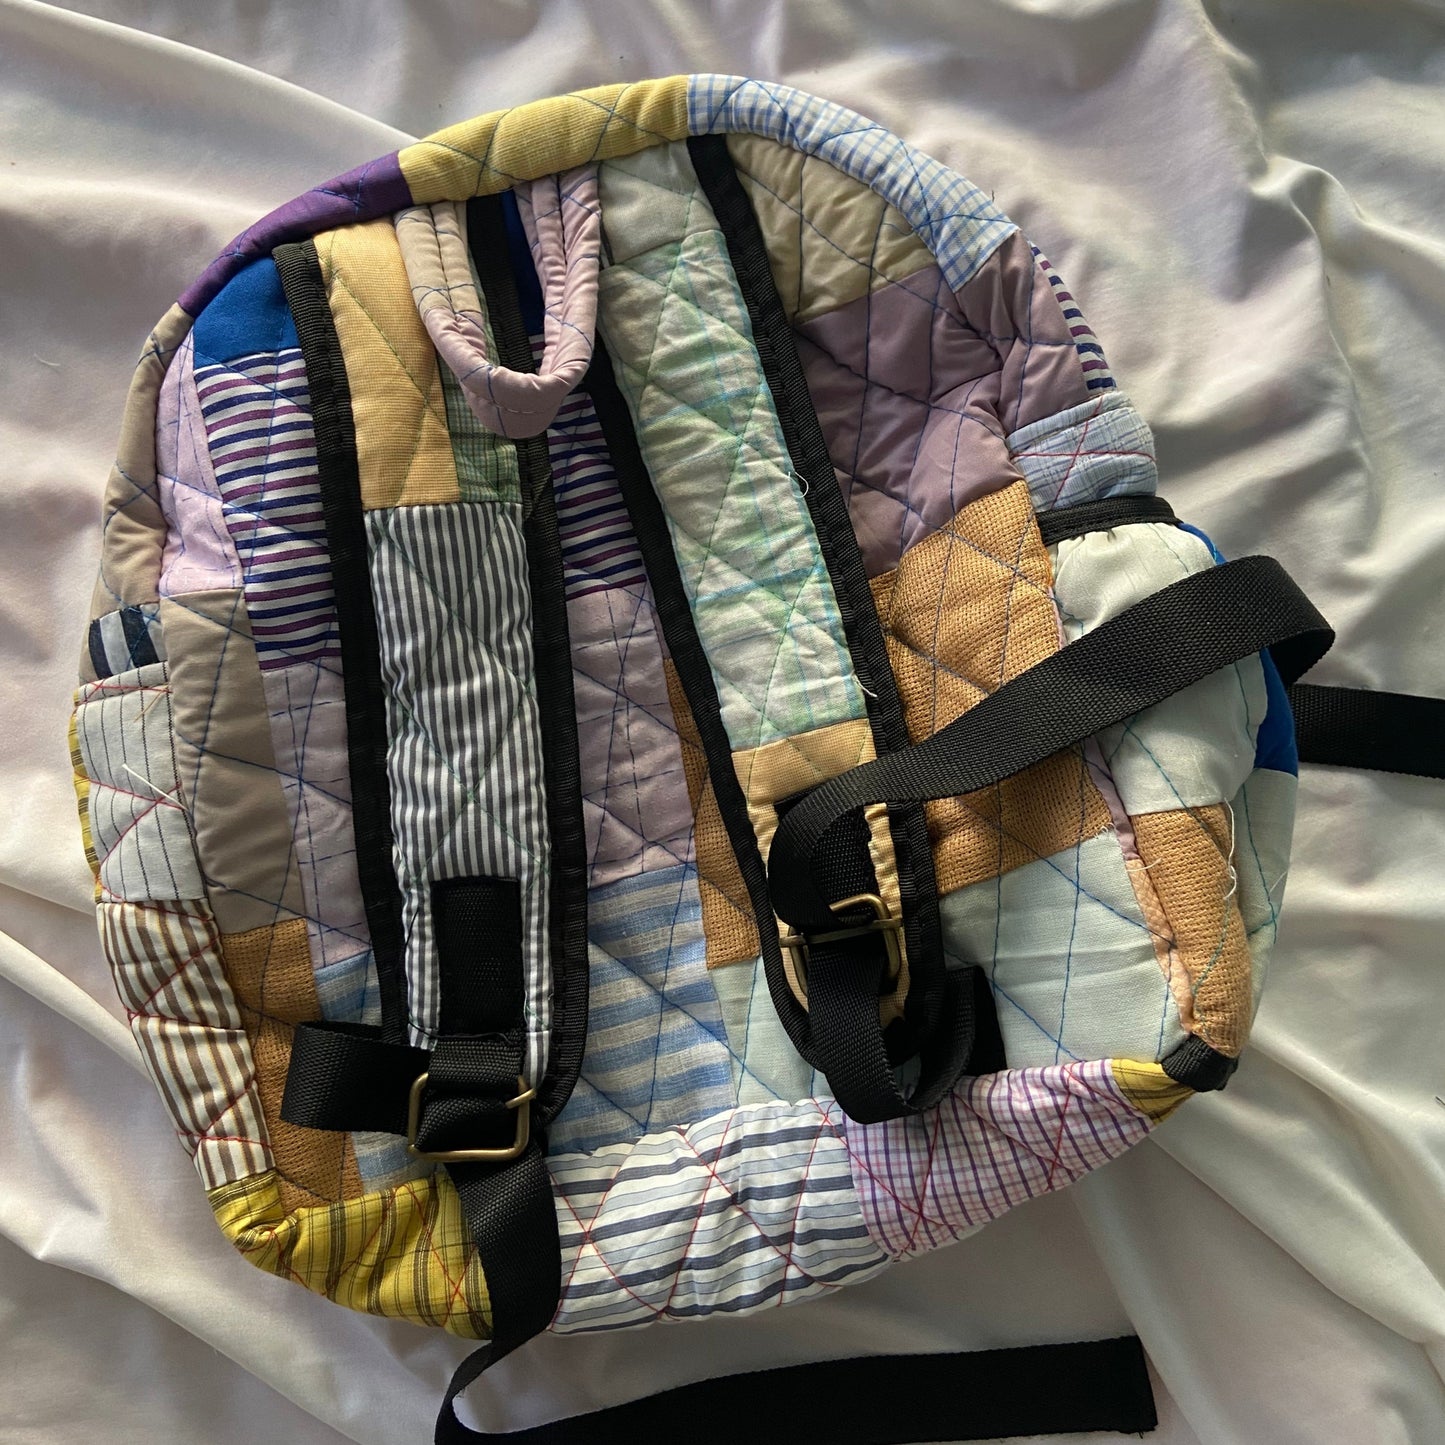 Customised Backpack for Kids